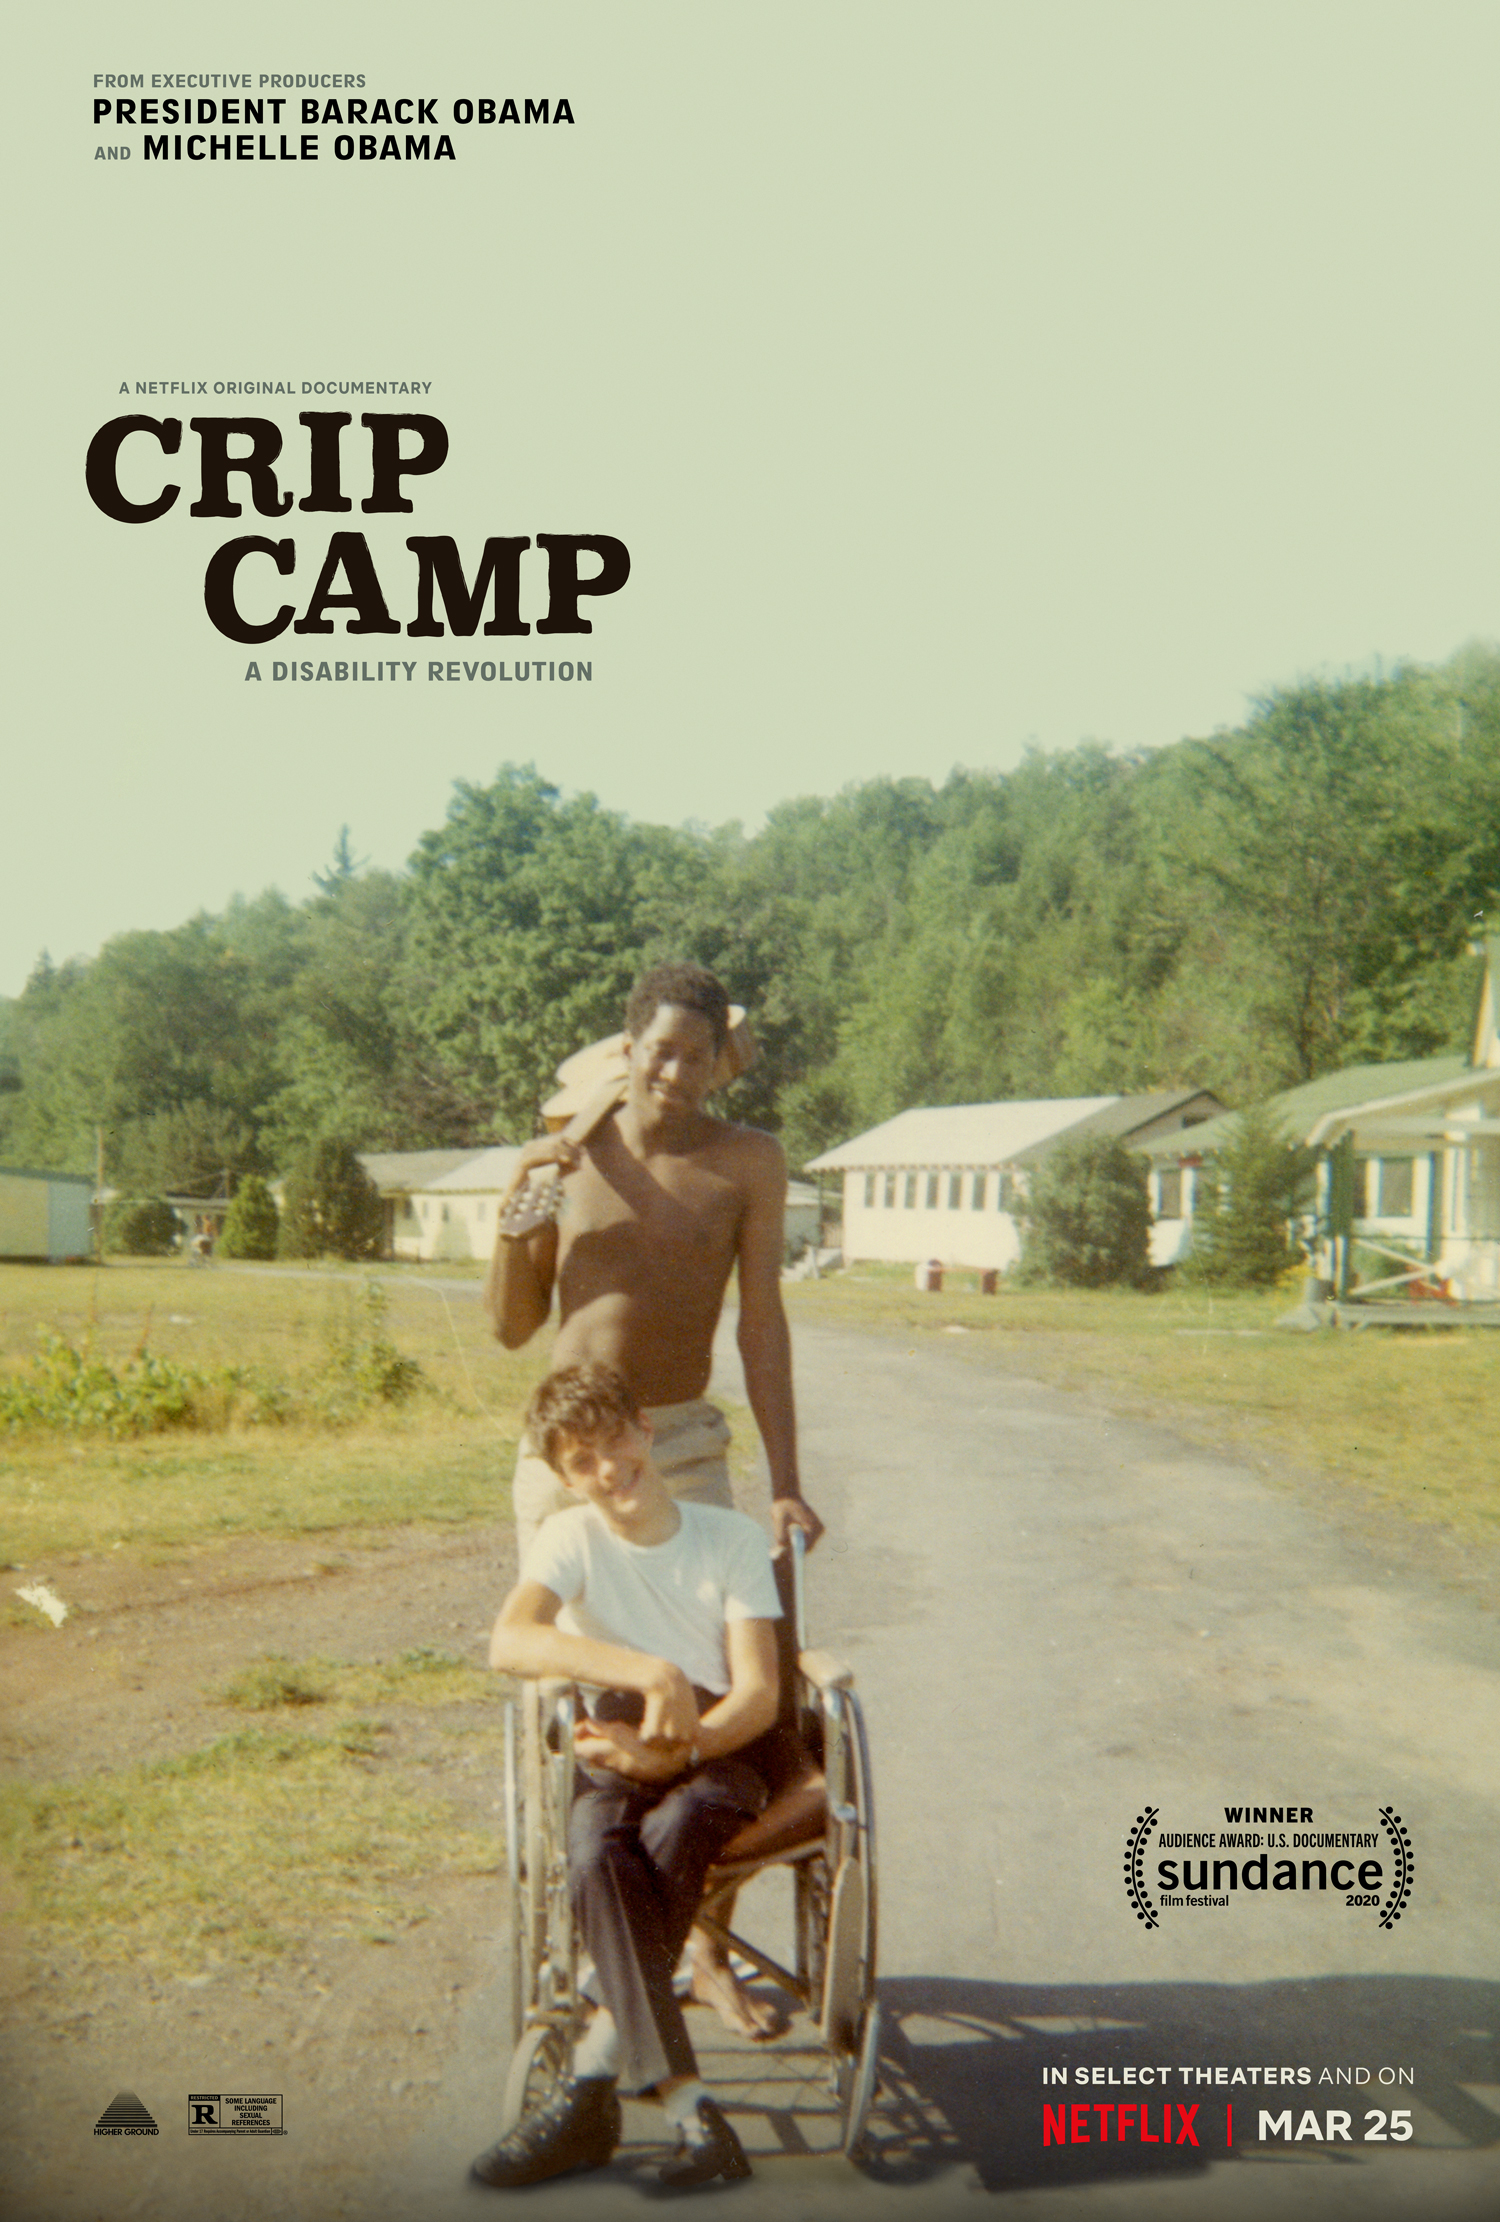 Nonton film Crip Camp layarkaca21 indoxx1 ganool online streaming terbaru